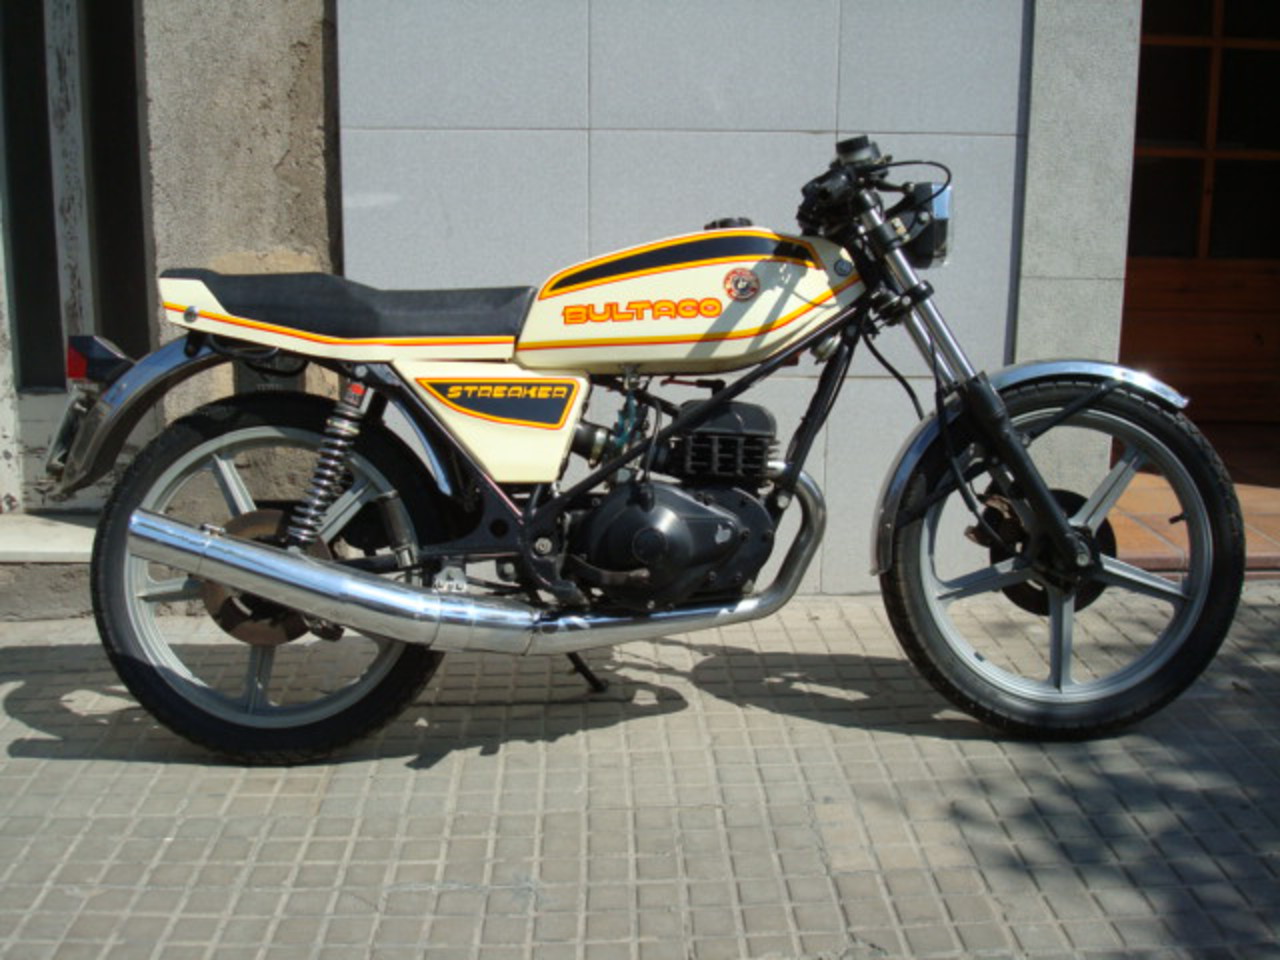 Bultaco streaker. Best photos and information of model.